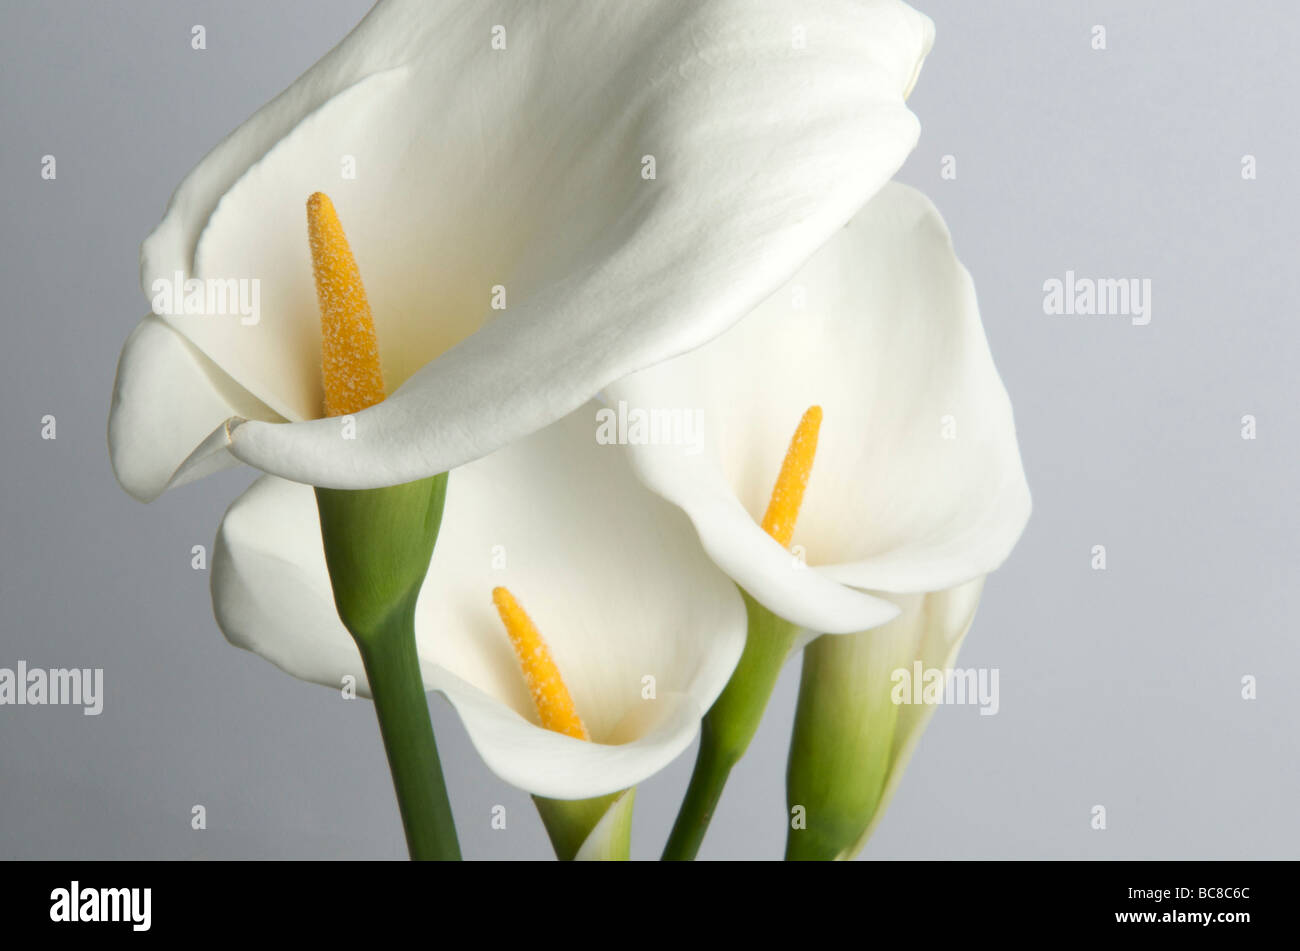 Arum lily fiori. Foto Stock